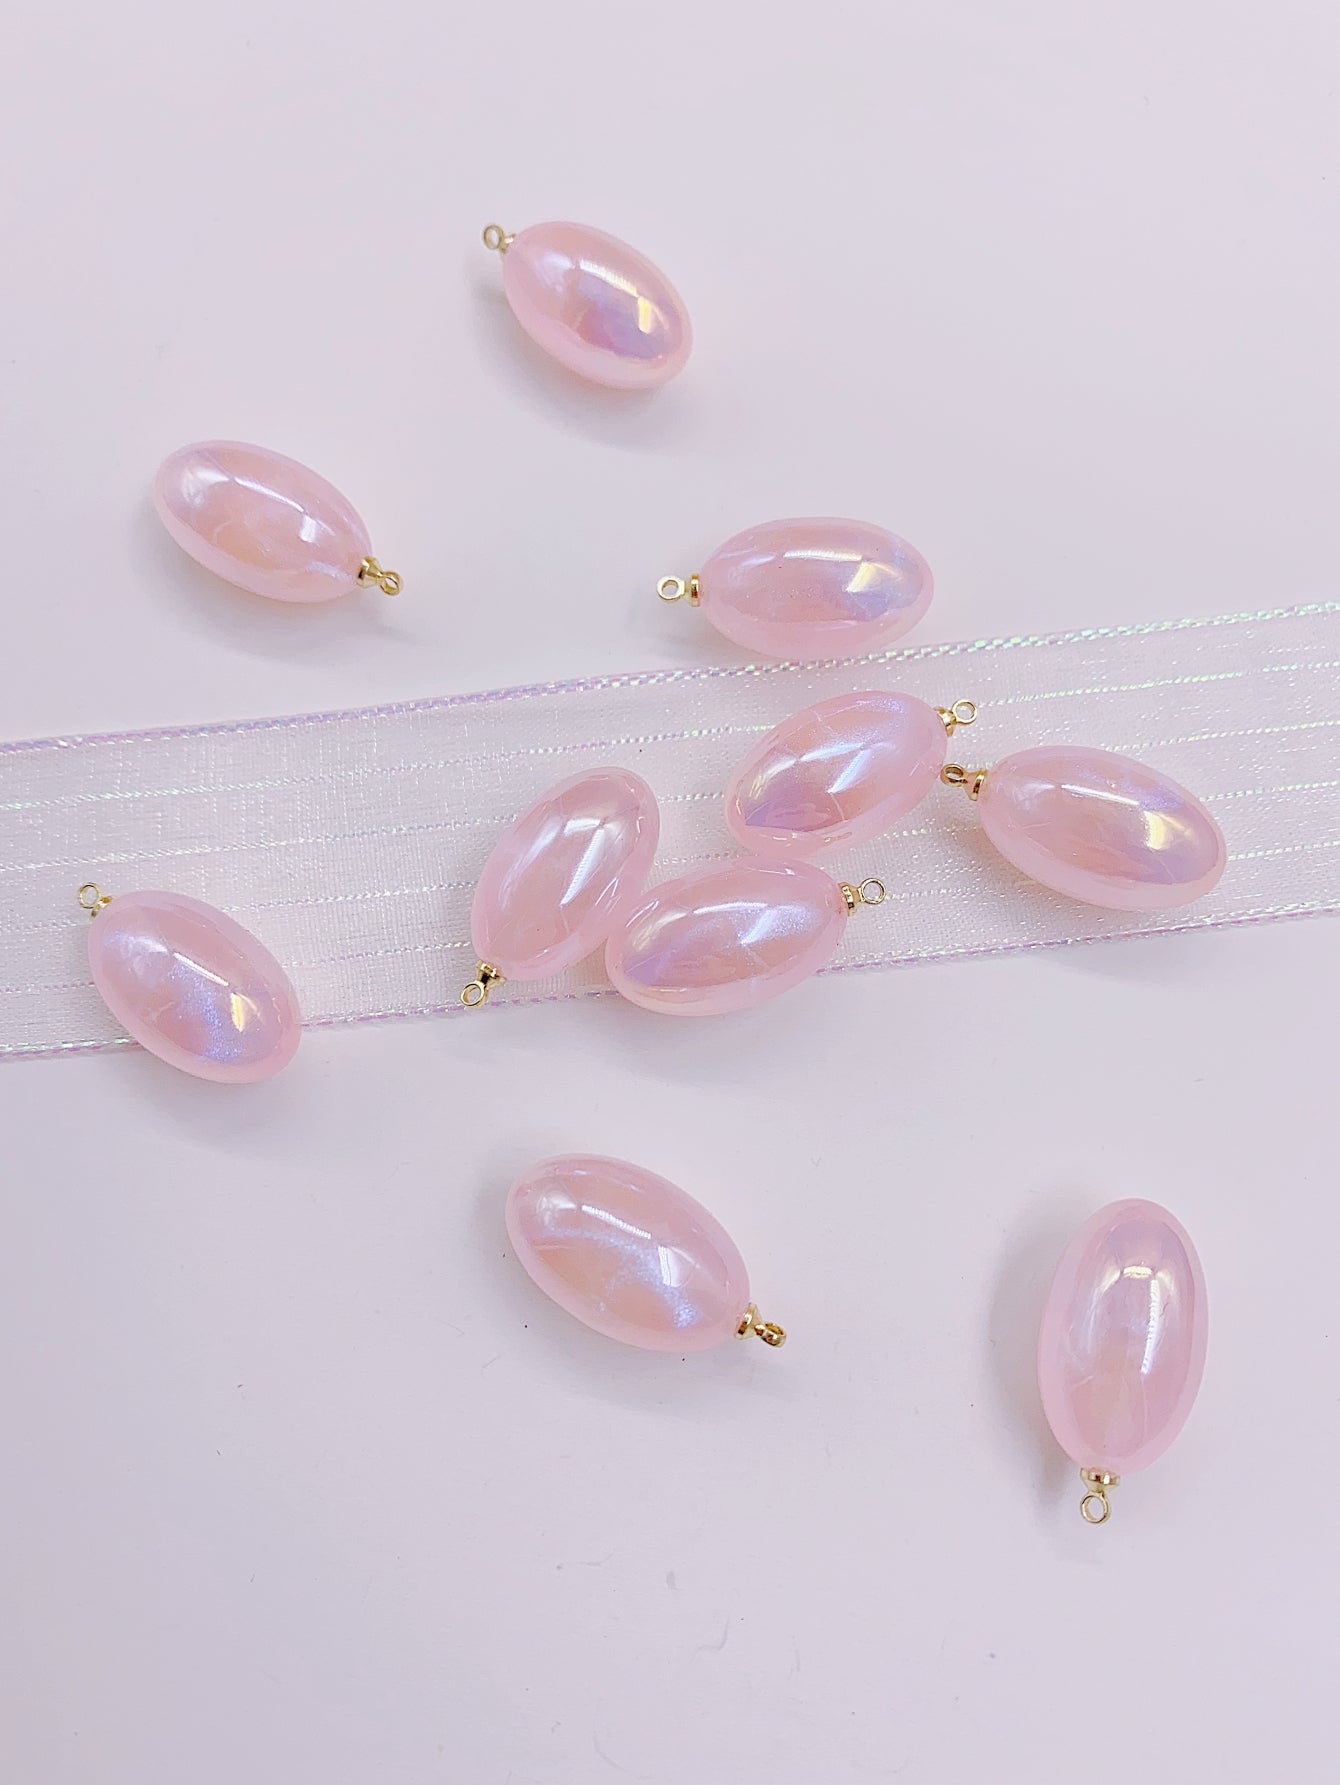 New mermaid star color series raisin oval hanging ornament diy accessories beaded materials